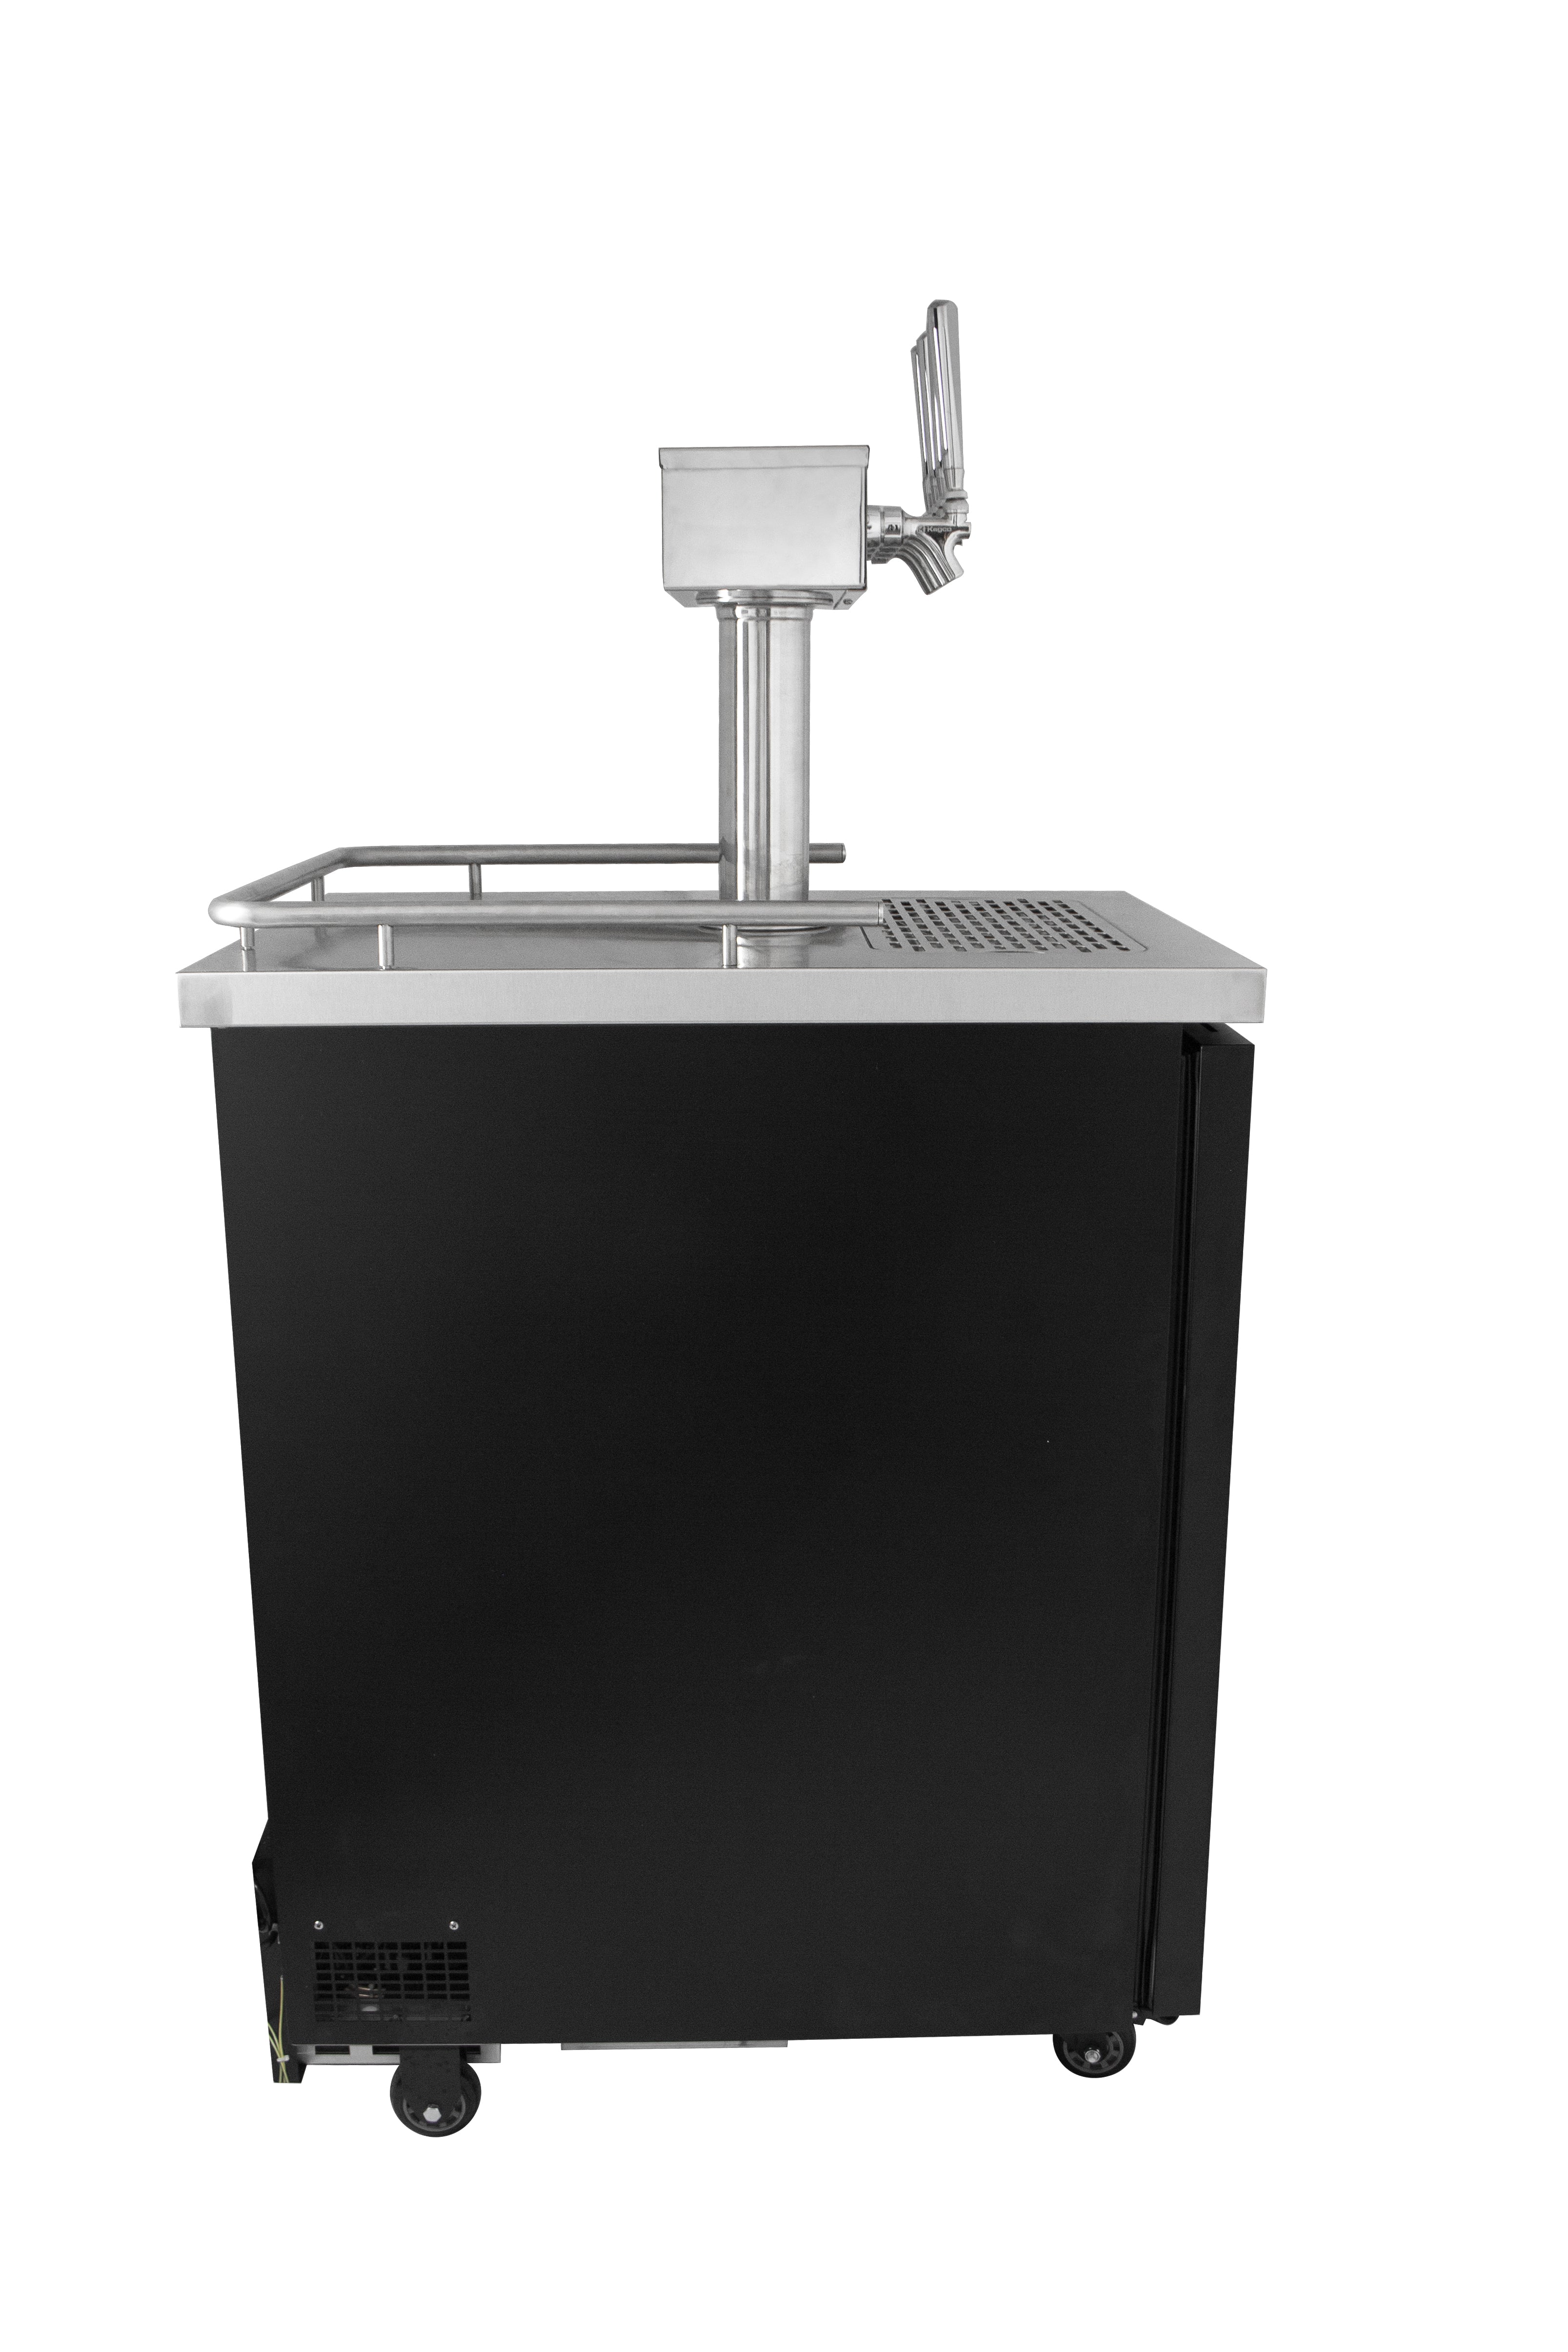 Four Faucet Commercial Kegerator Iced Coffee Keg Dispenser Black